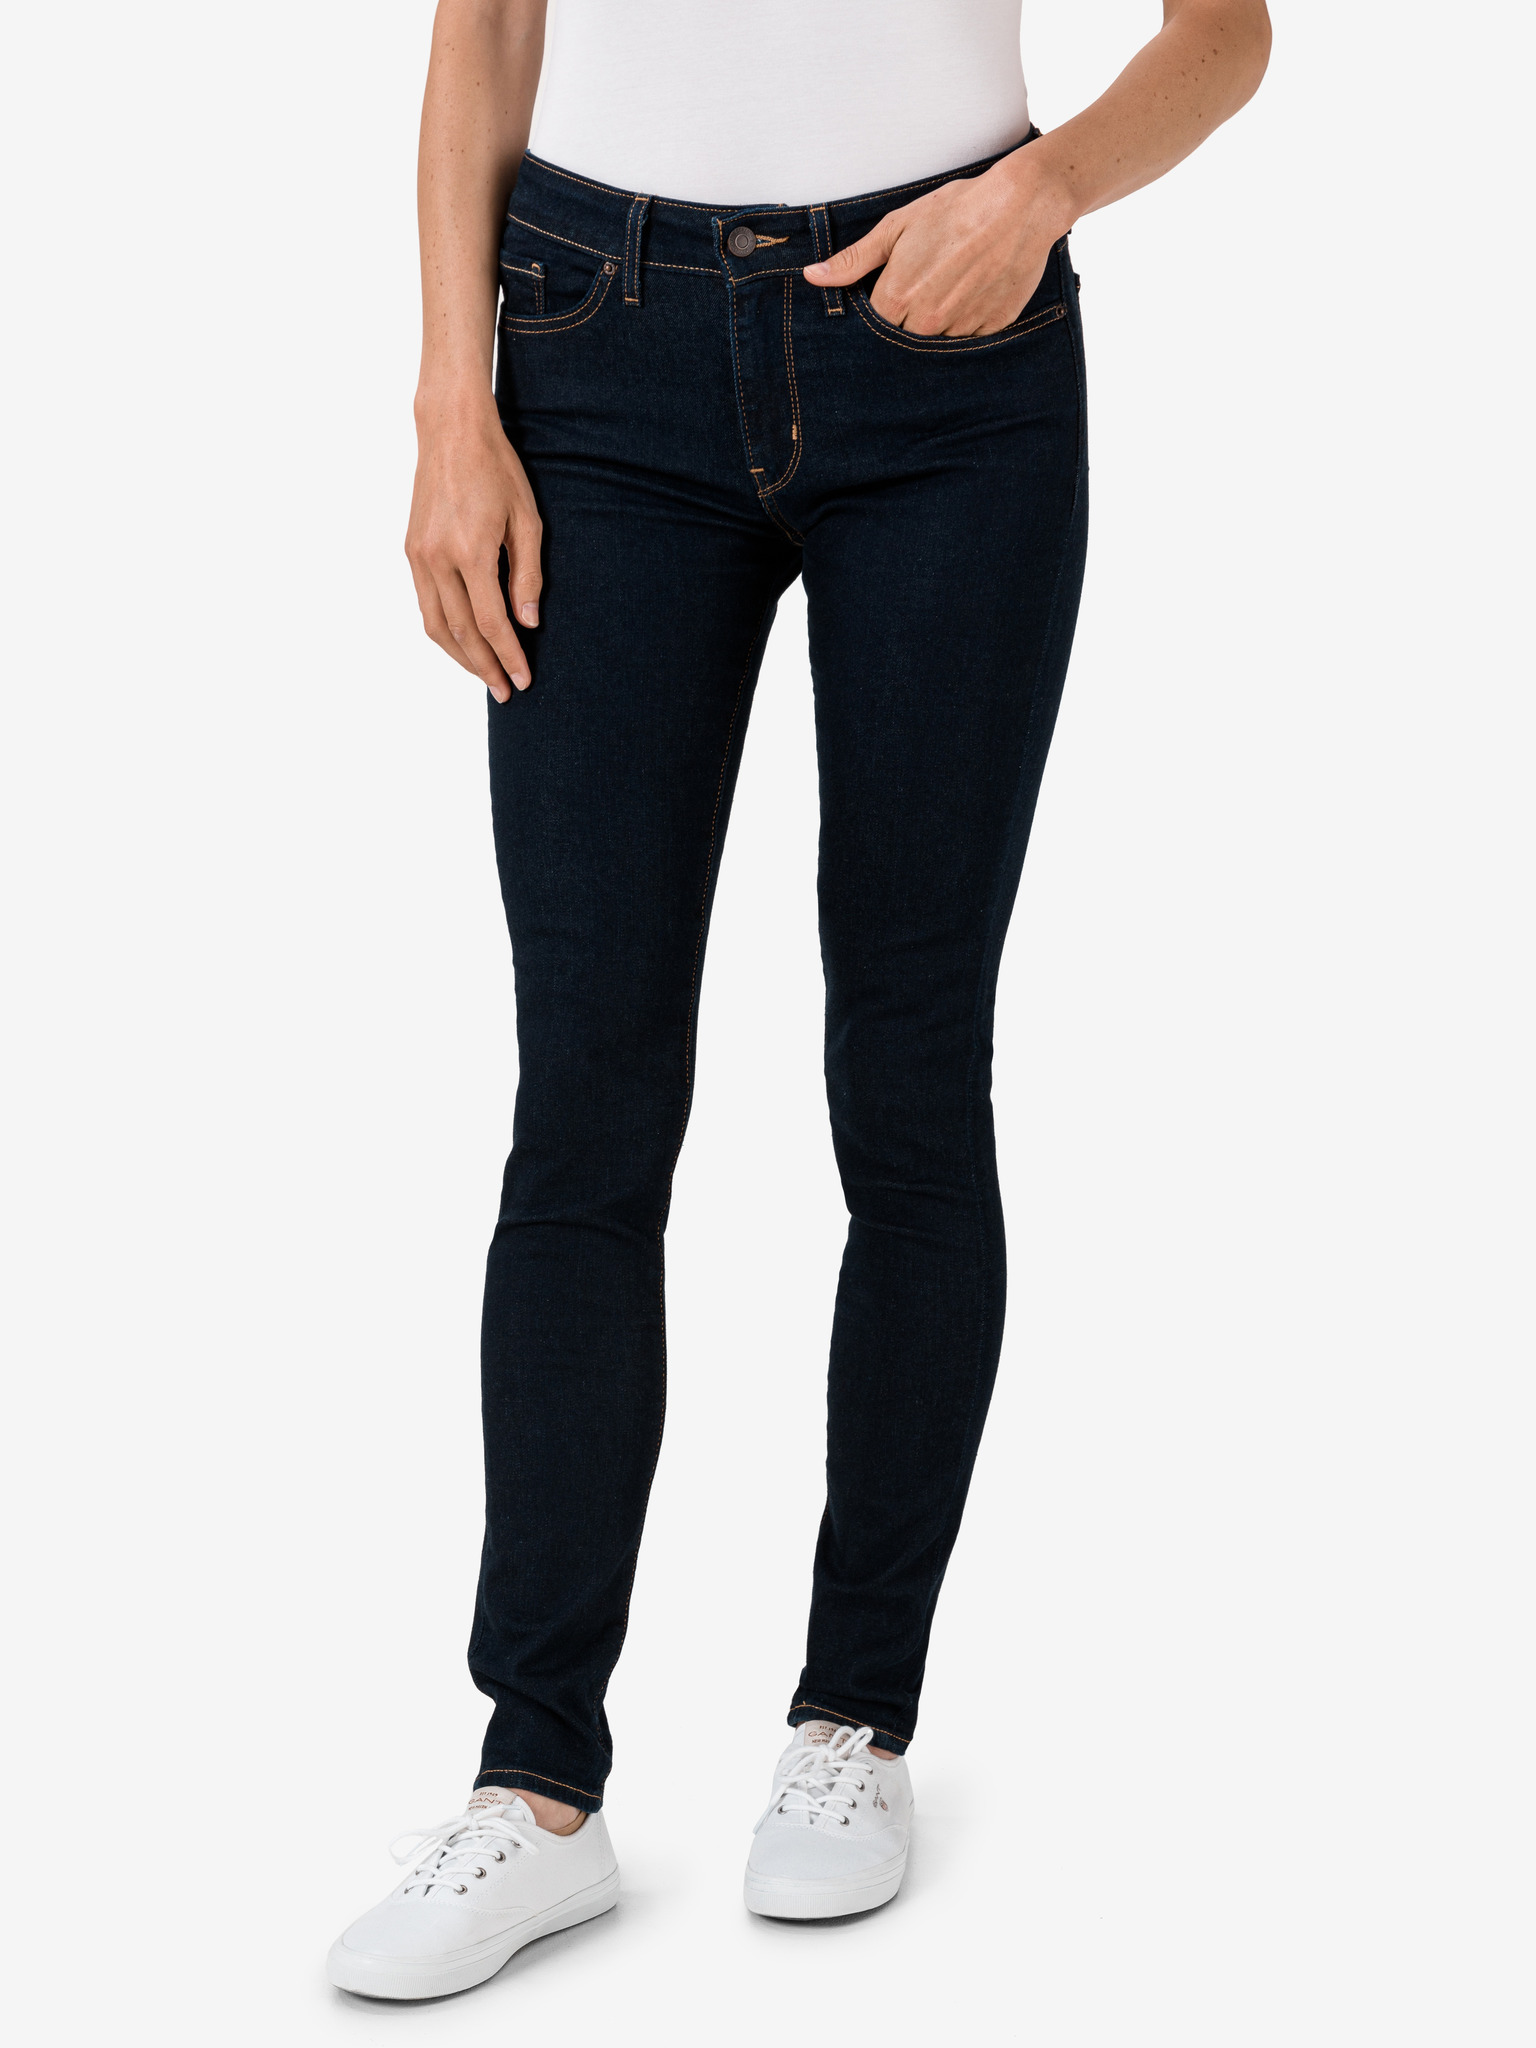 711™ Skinny Jeans Levi's®